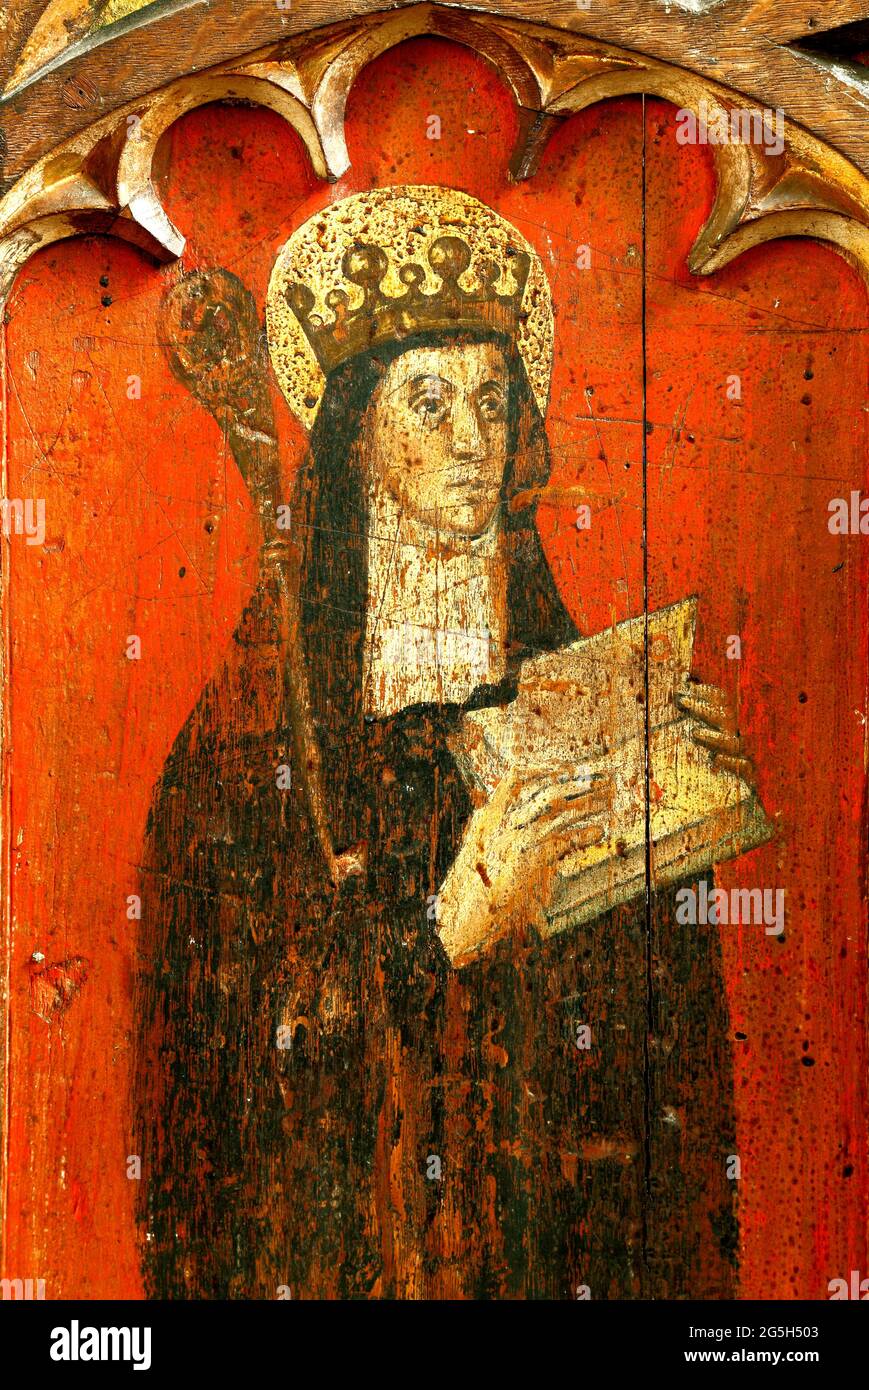 St. Etheldreda, rood screen painting, c.1500, North Tuddenham, Norfolk. Saint, Abbess, Queen of East Anglia, England, UK Stock Photo